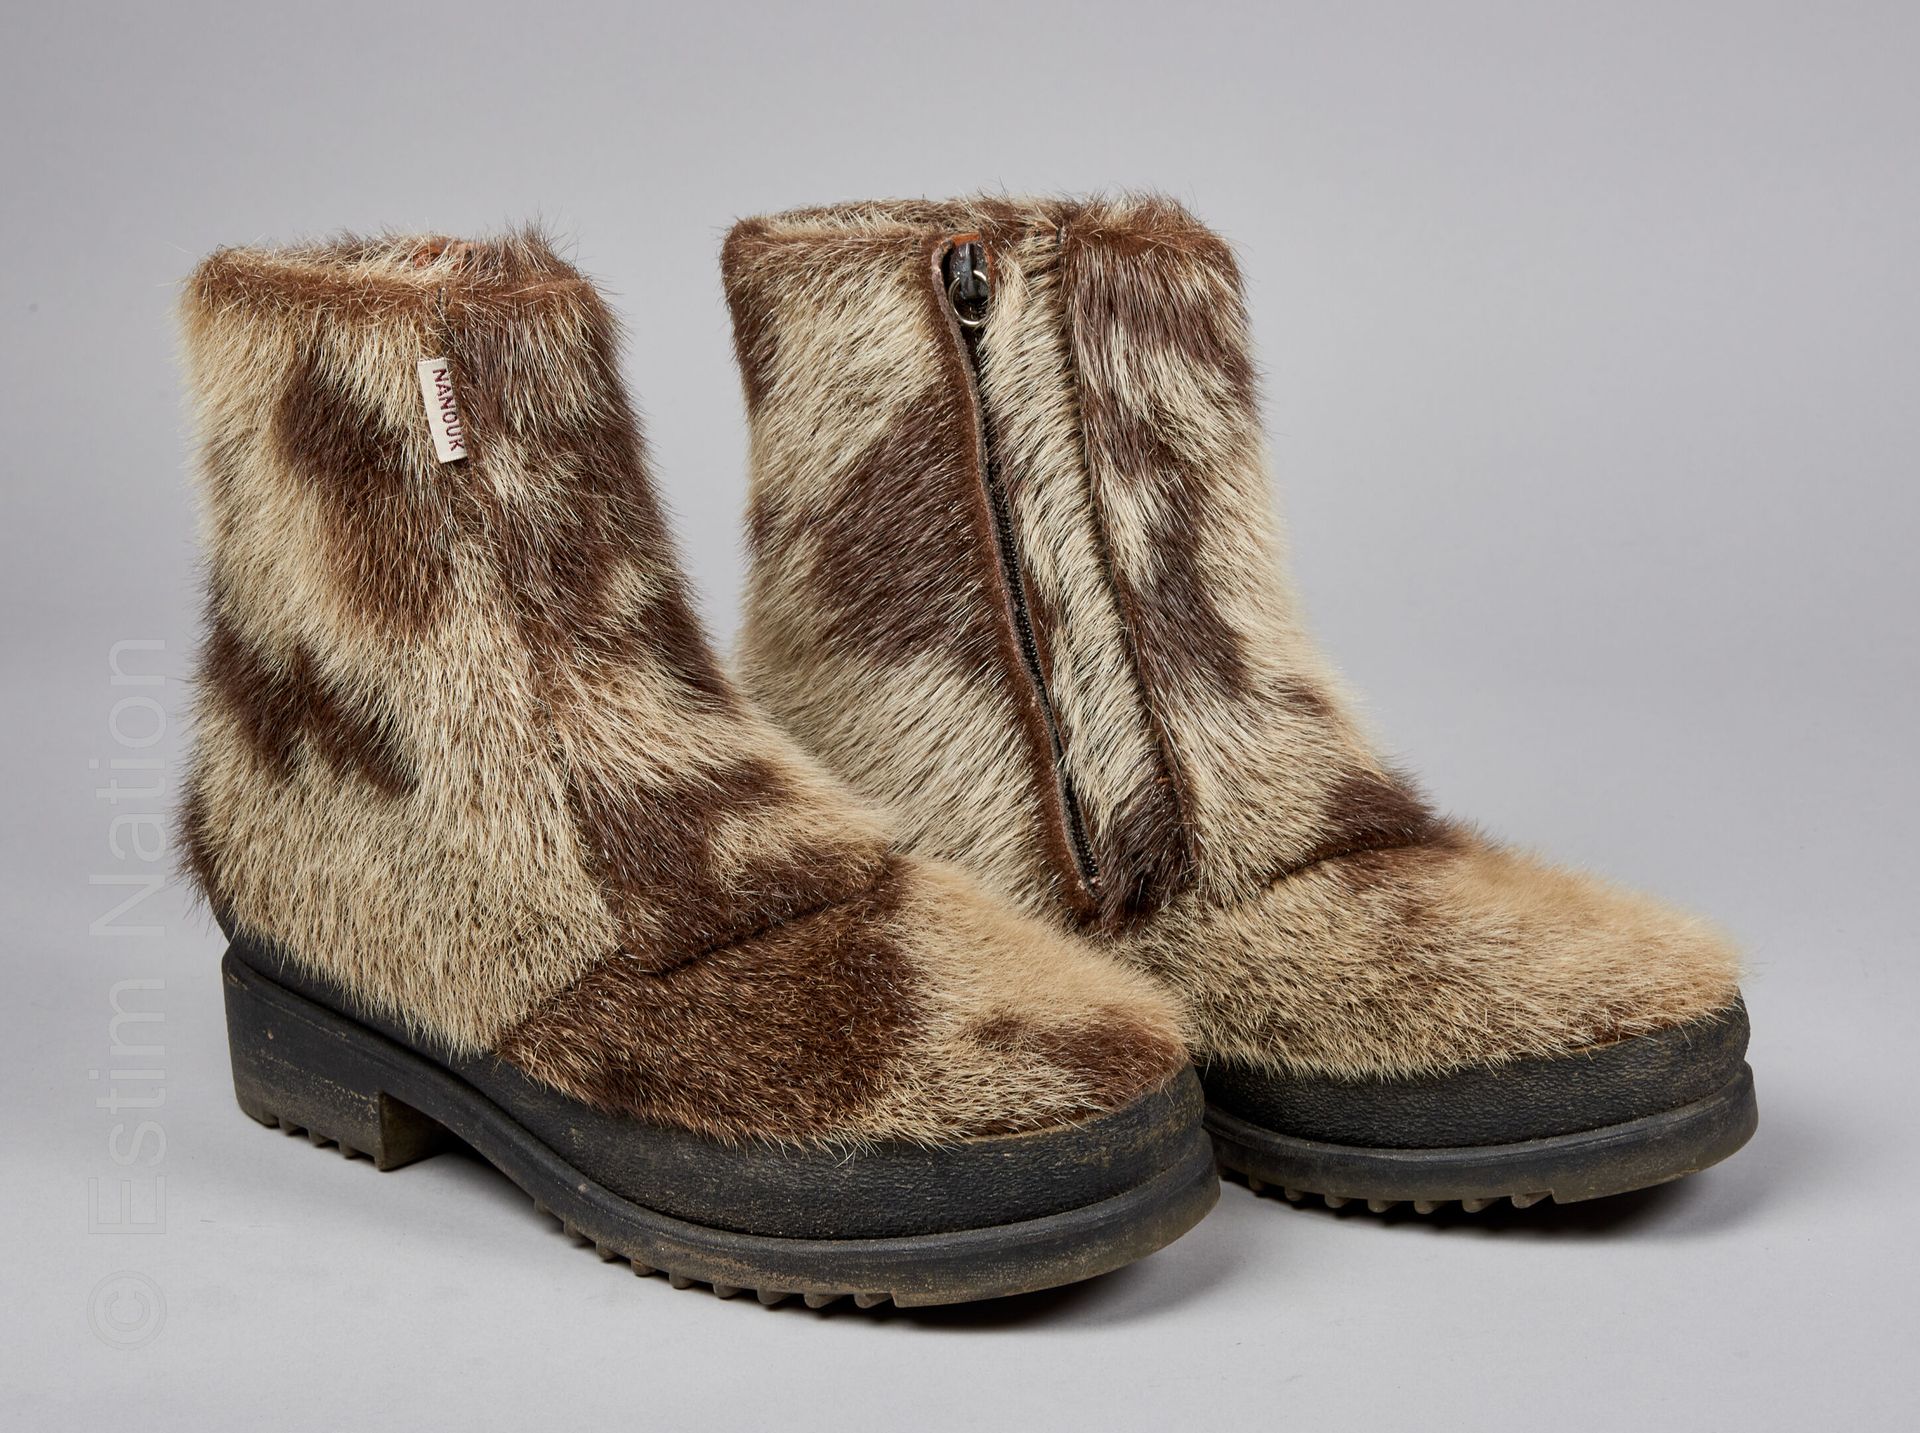 NANOUK CIRCA 1970 Pair of ringed seal snow boots, composite soles (P 43). (Speci&hellip;